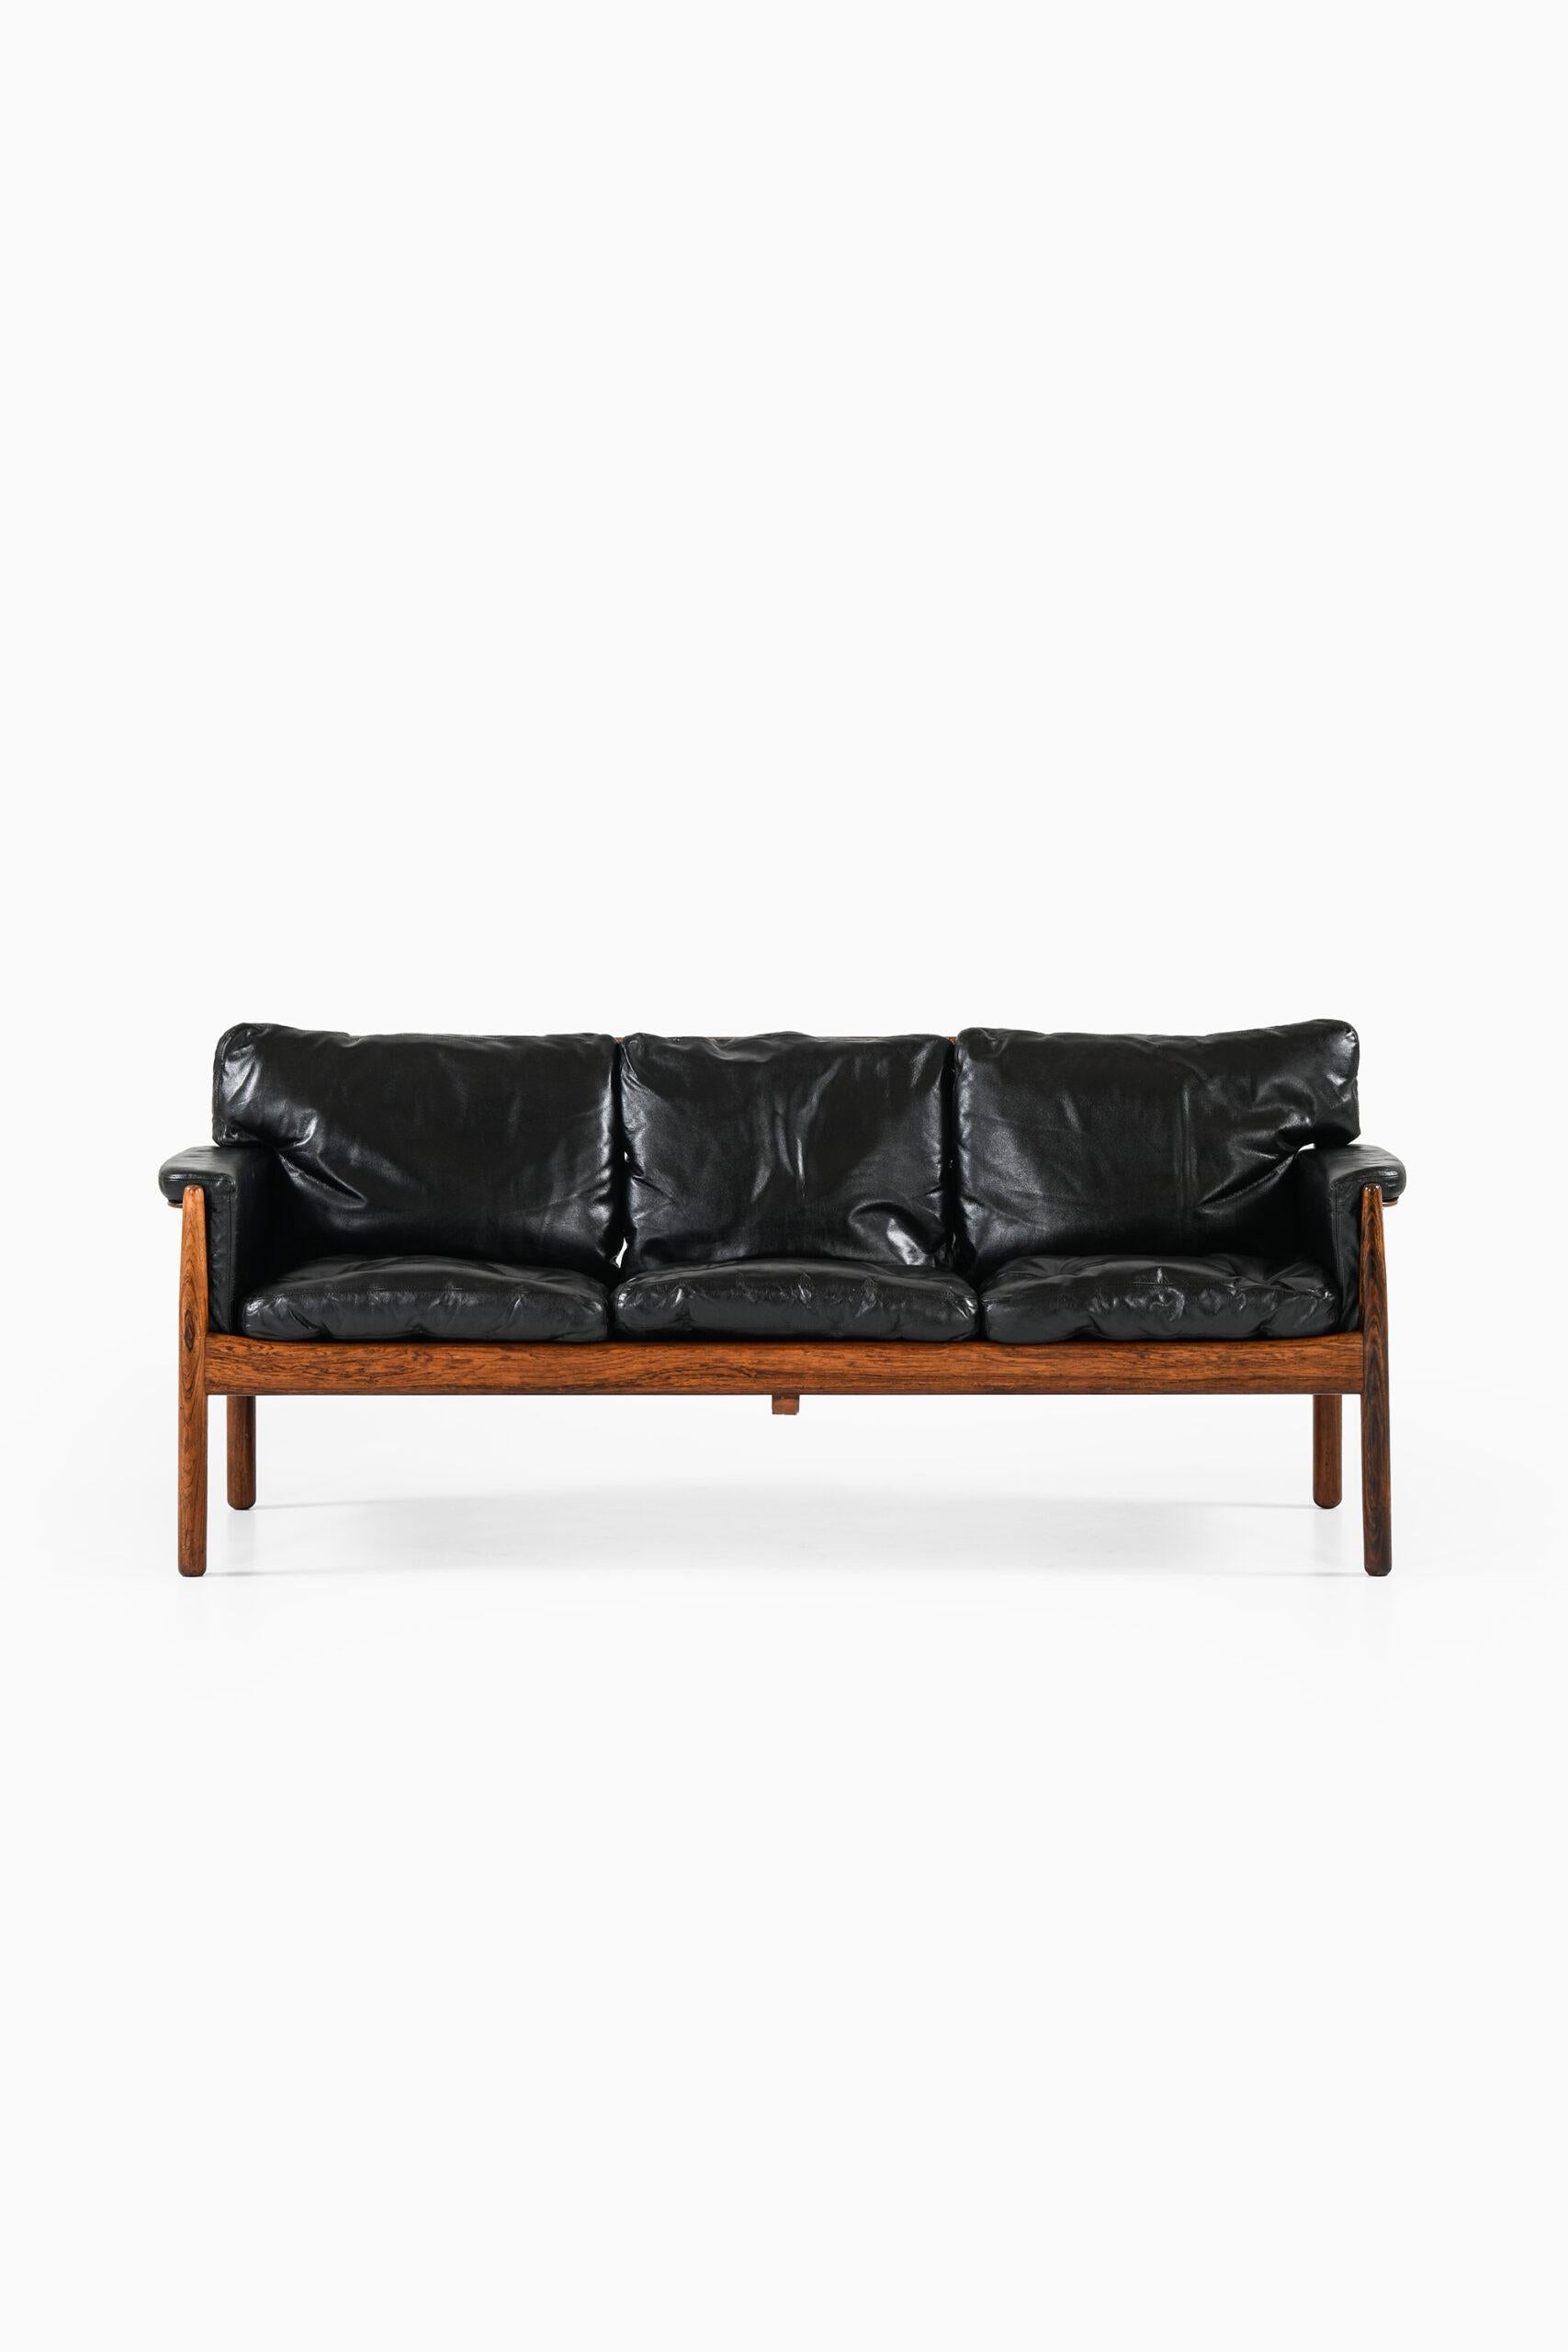 Gunnar Myrstrand Sofa Produced by Källemo in Sweden For Sale 3